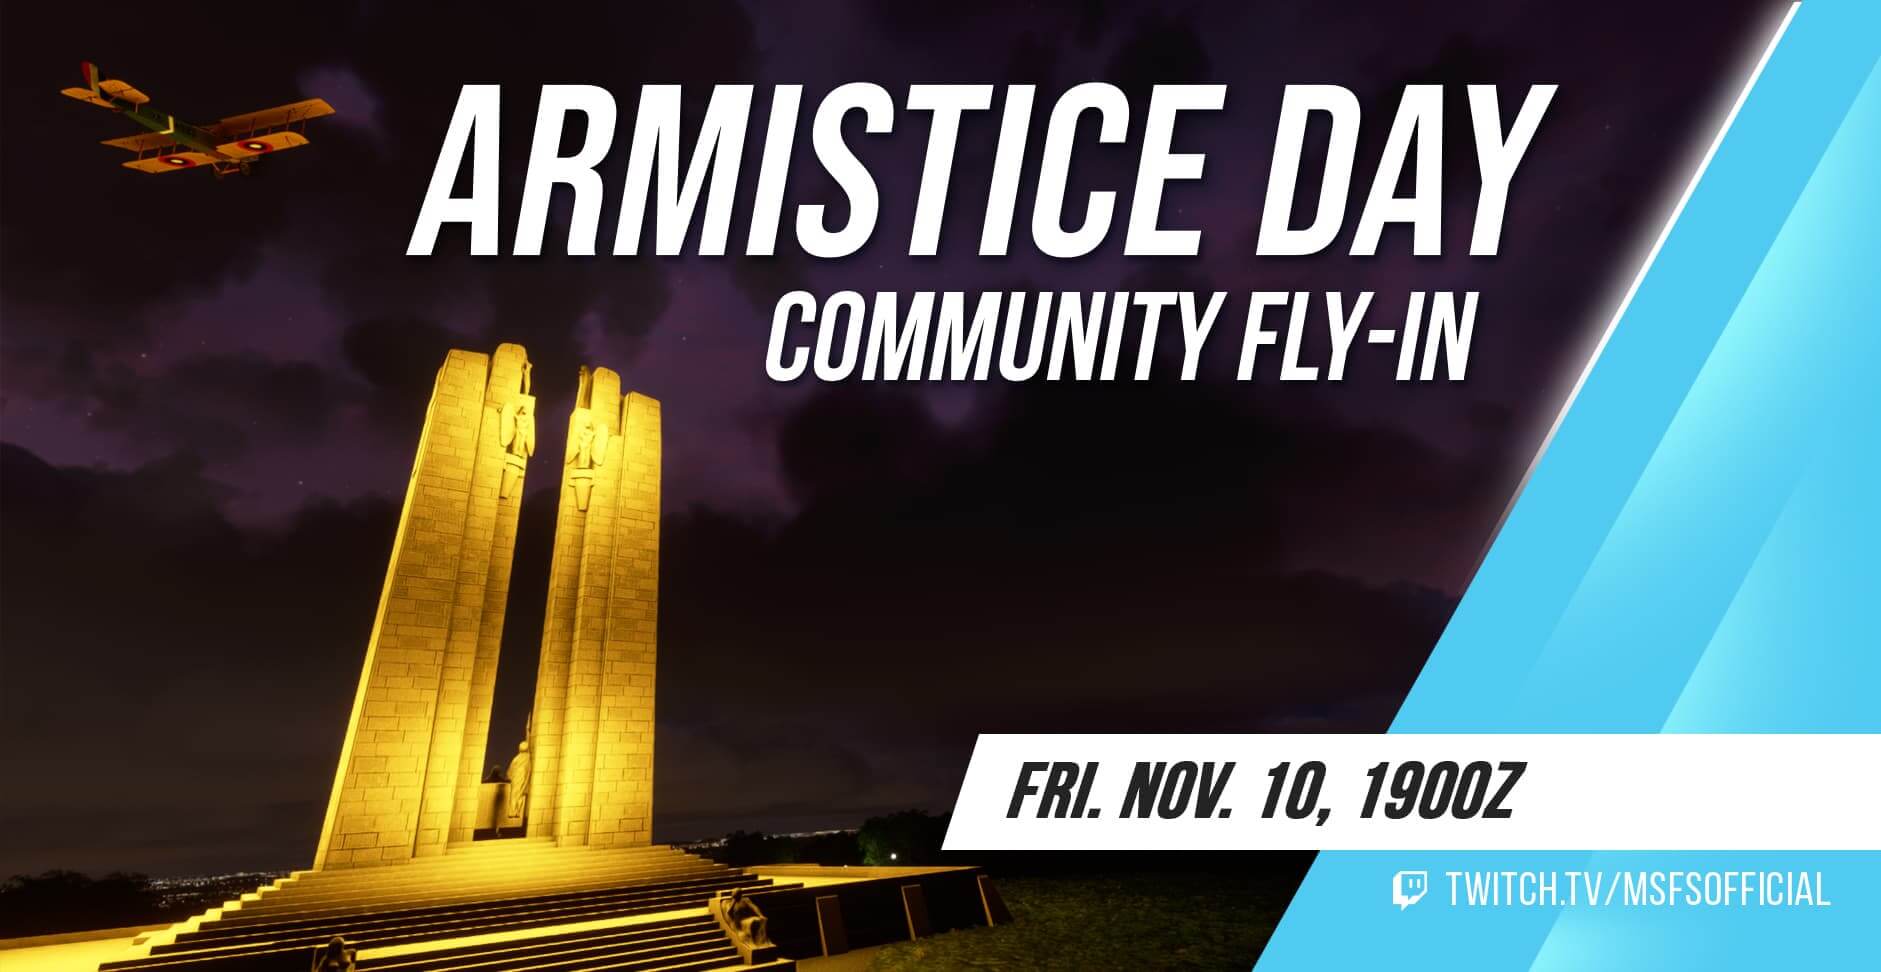 Community Fly-In Friday" Armistice Day. Friday, November 10th, 1900 UTC, twitch.tv/msfsofficial